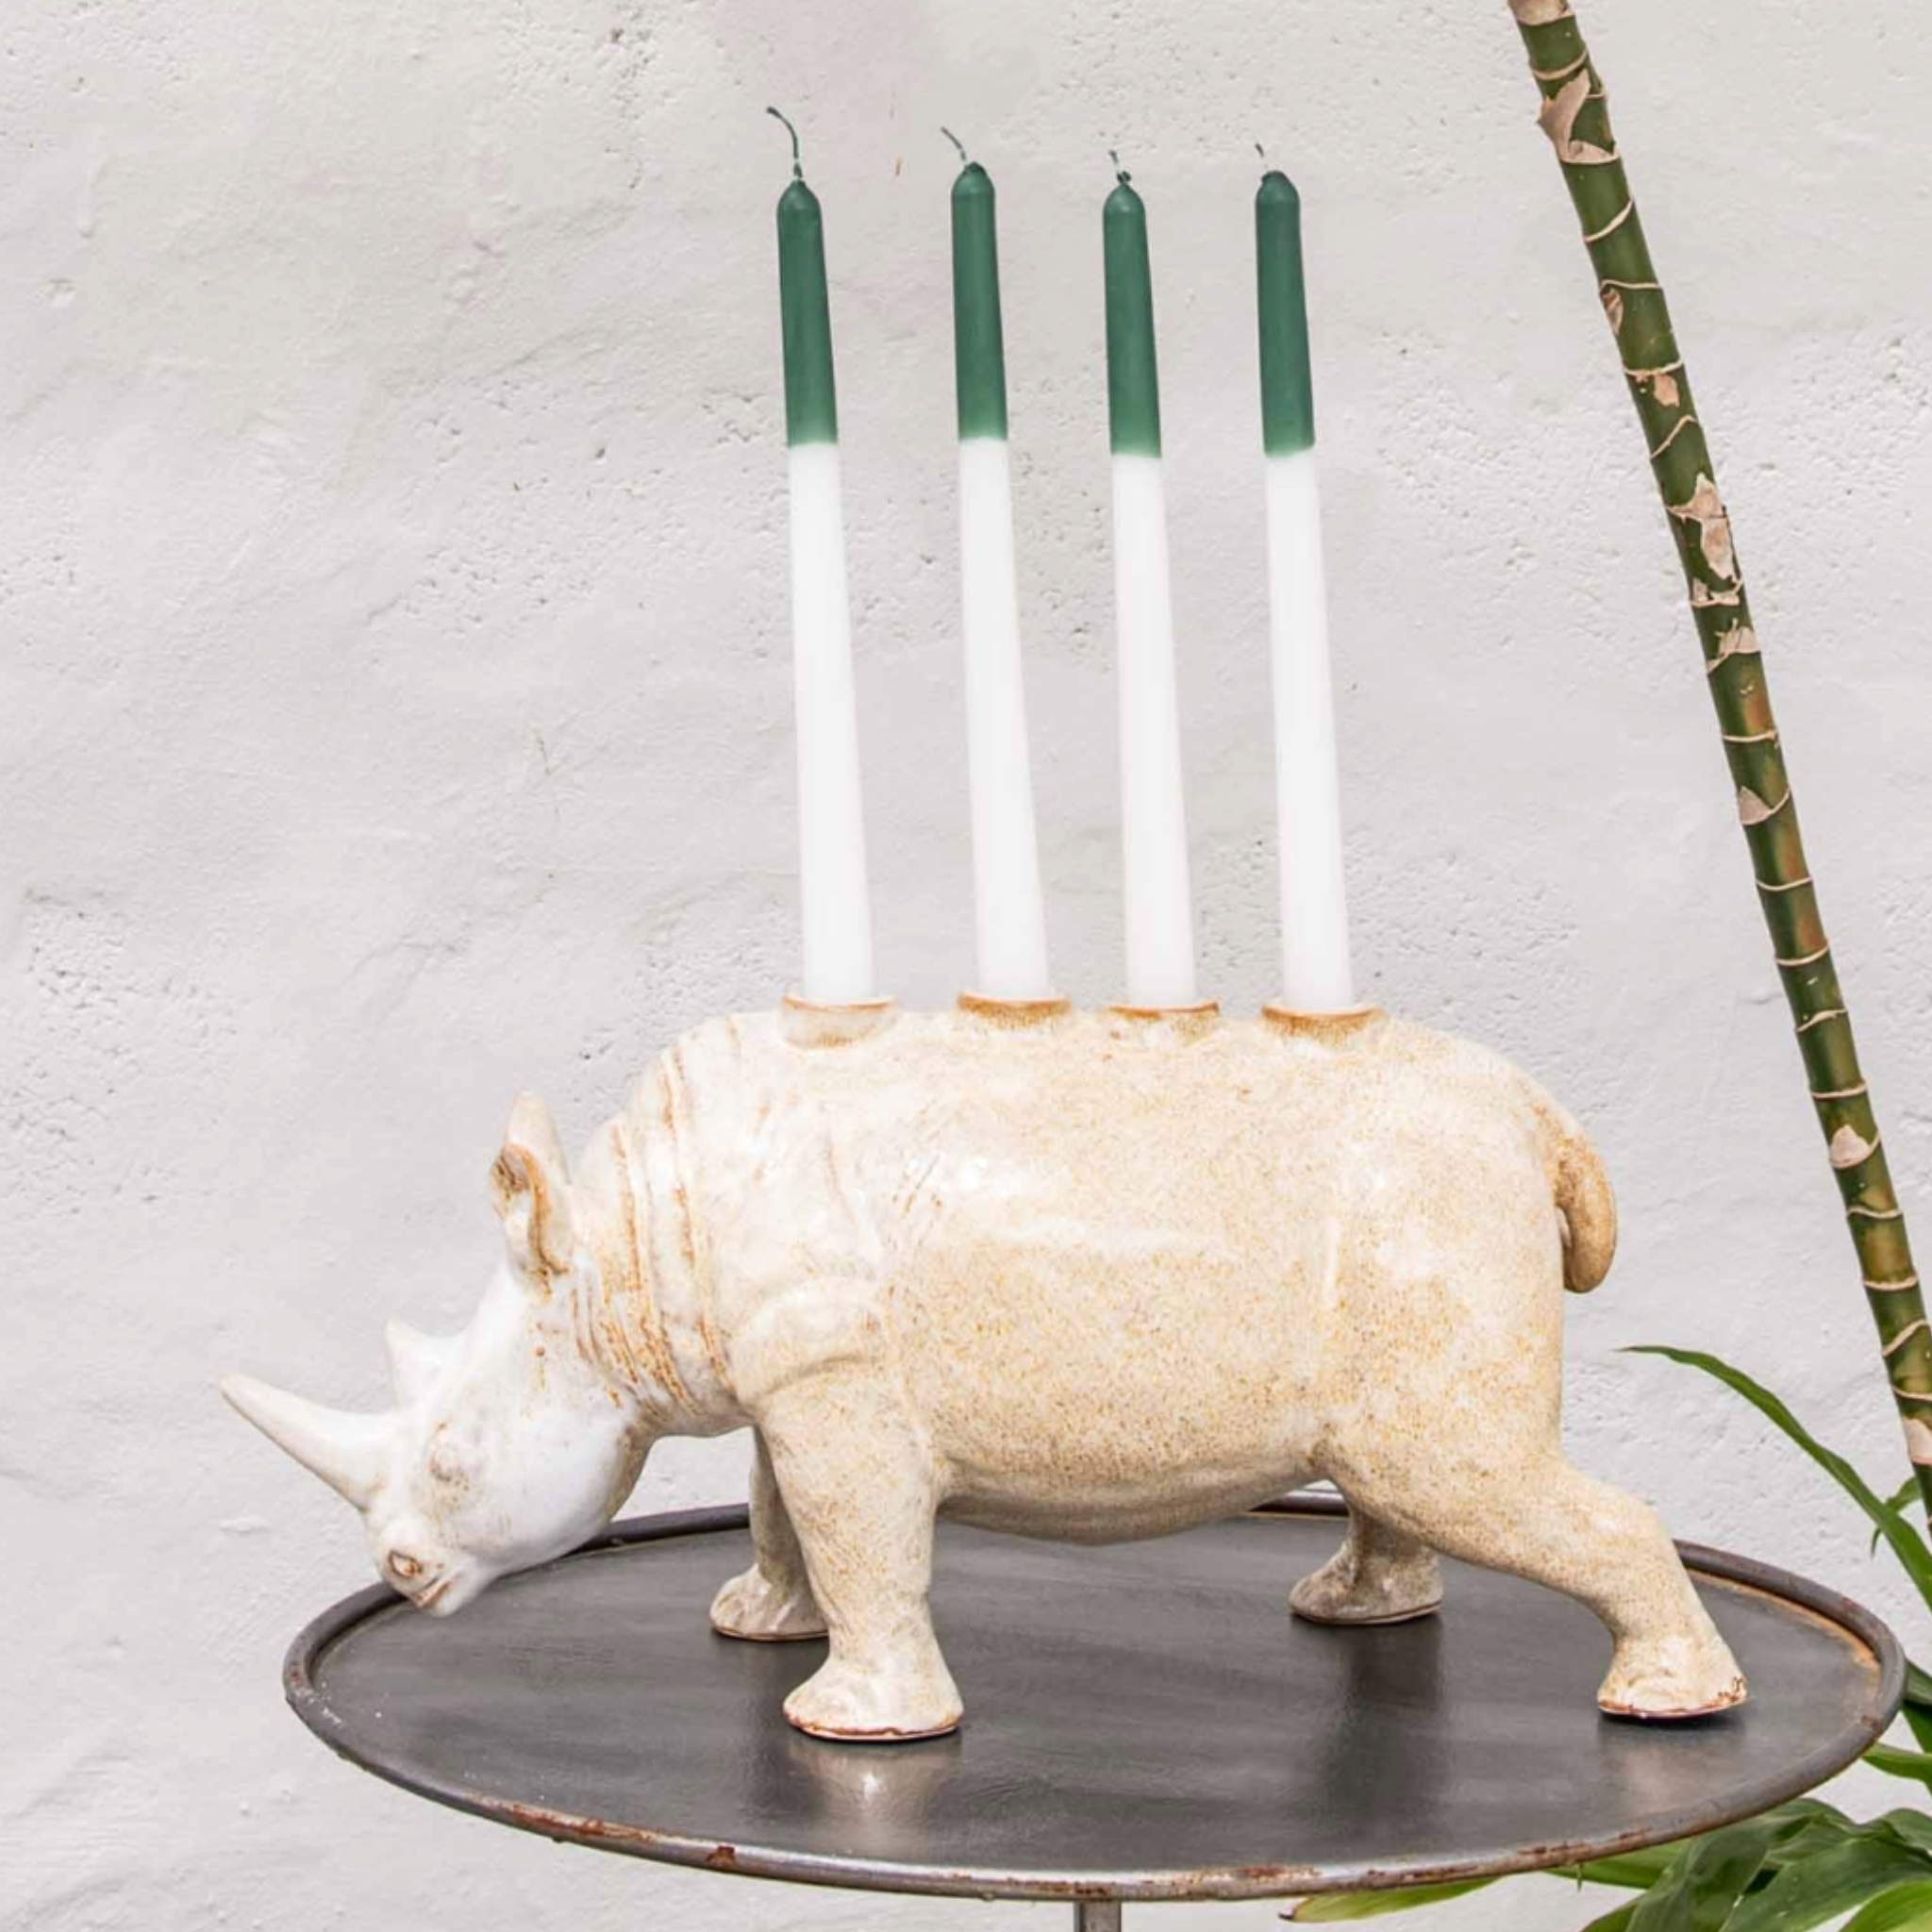 Mythical Rhino Candle Holder large - Rialheim 